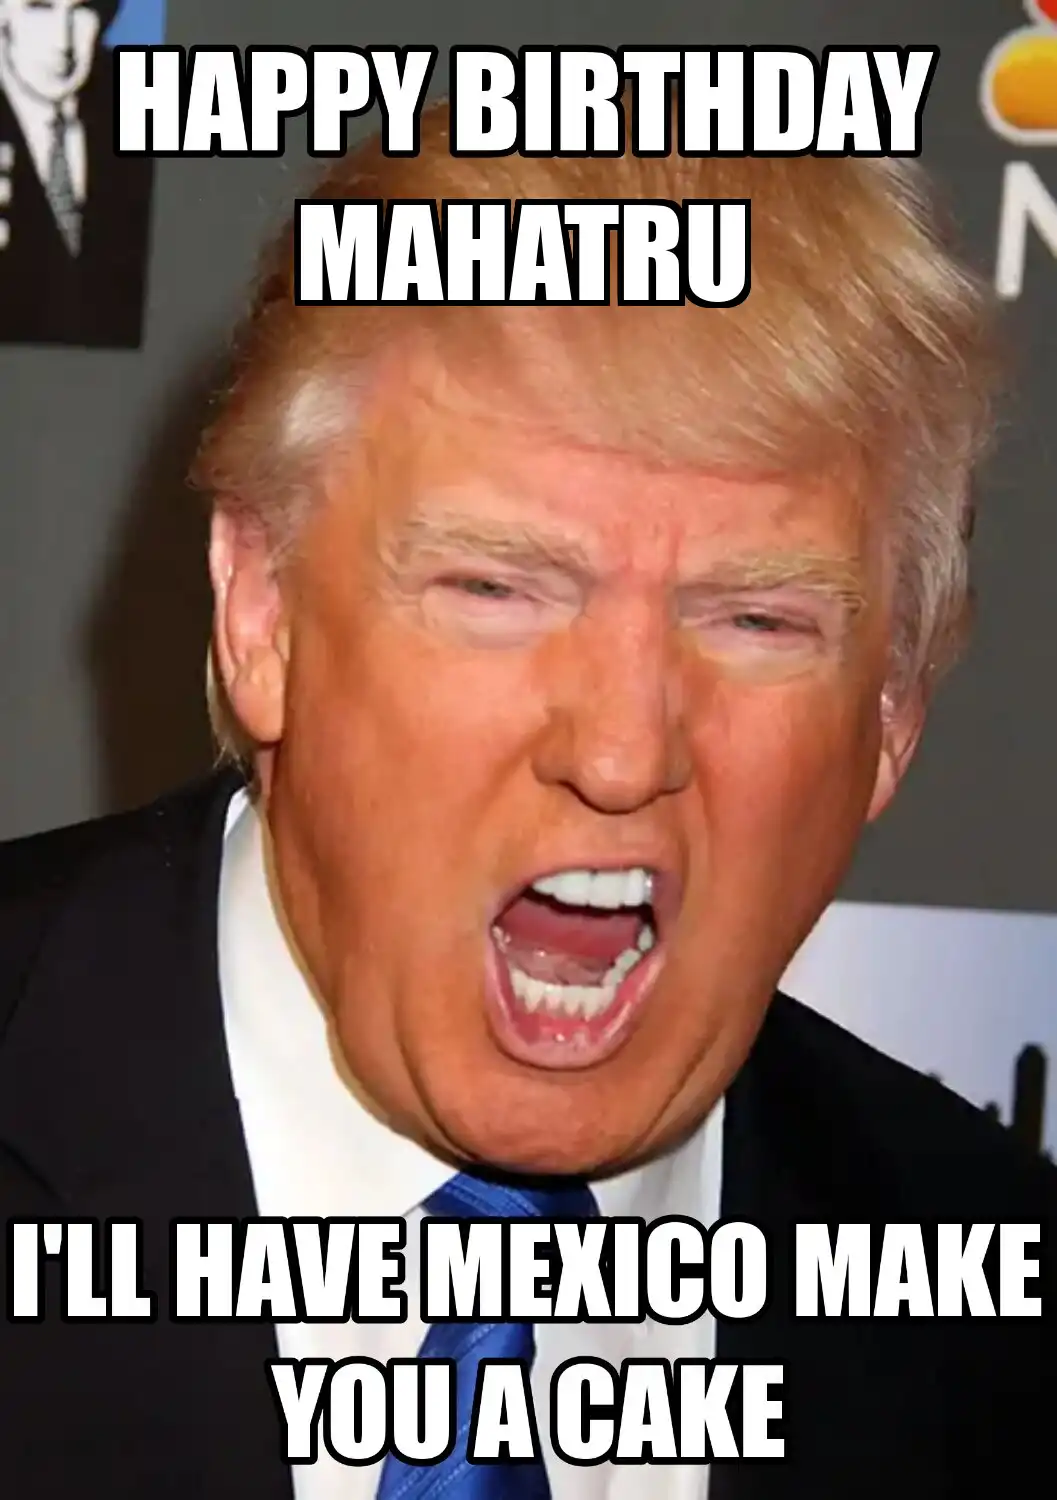 Happy Birthday Mahatru Mexico Make You A Cake Meme